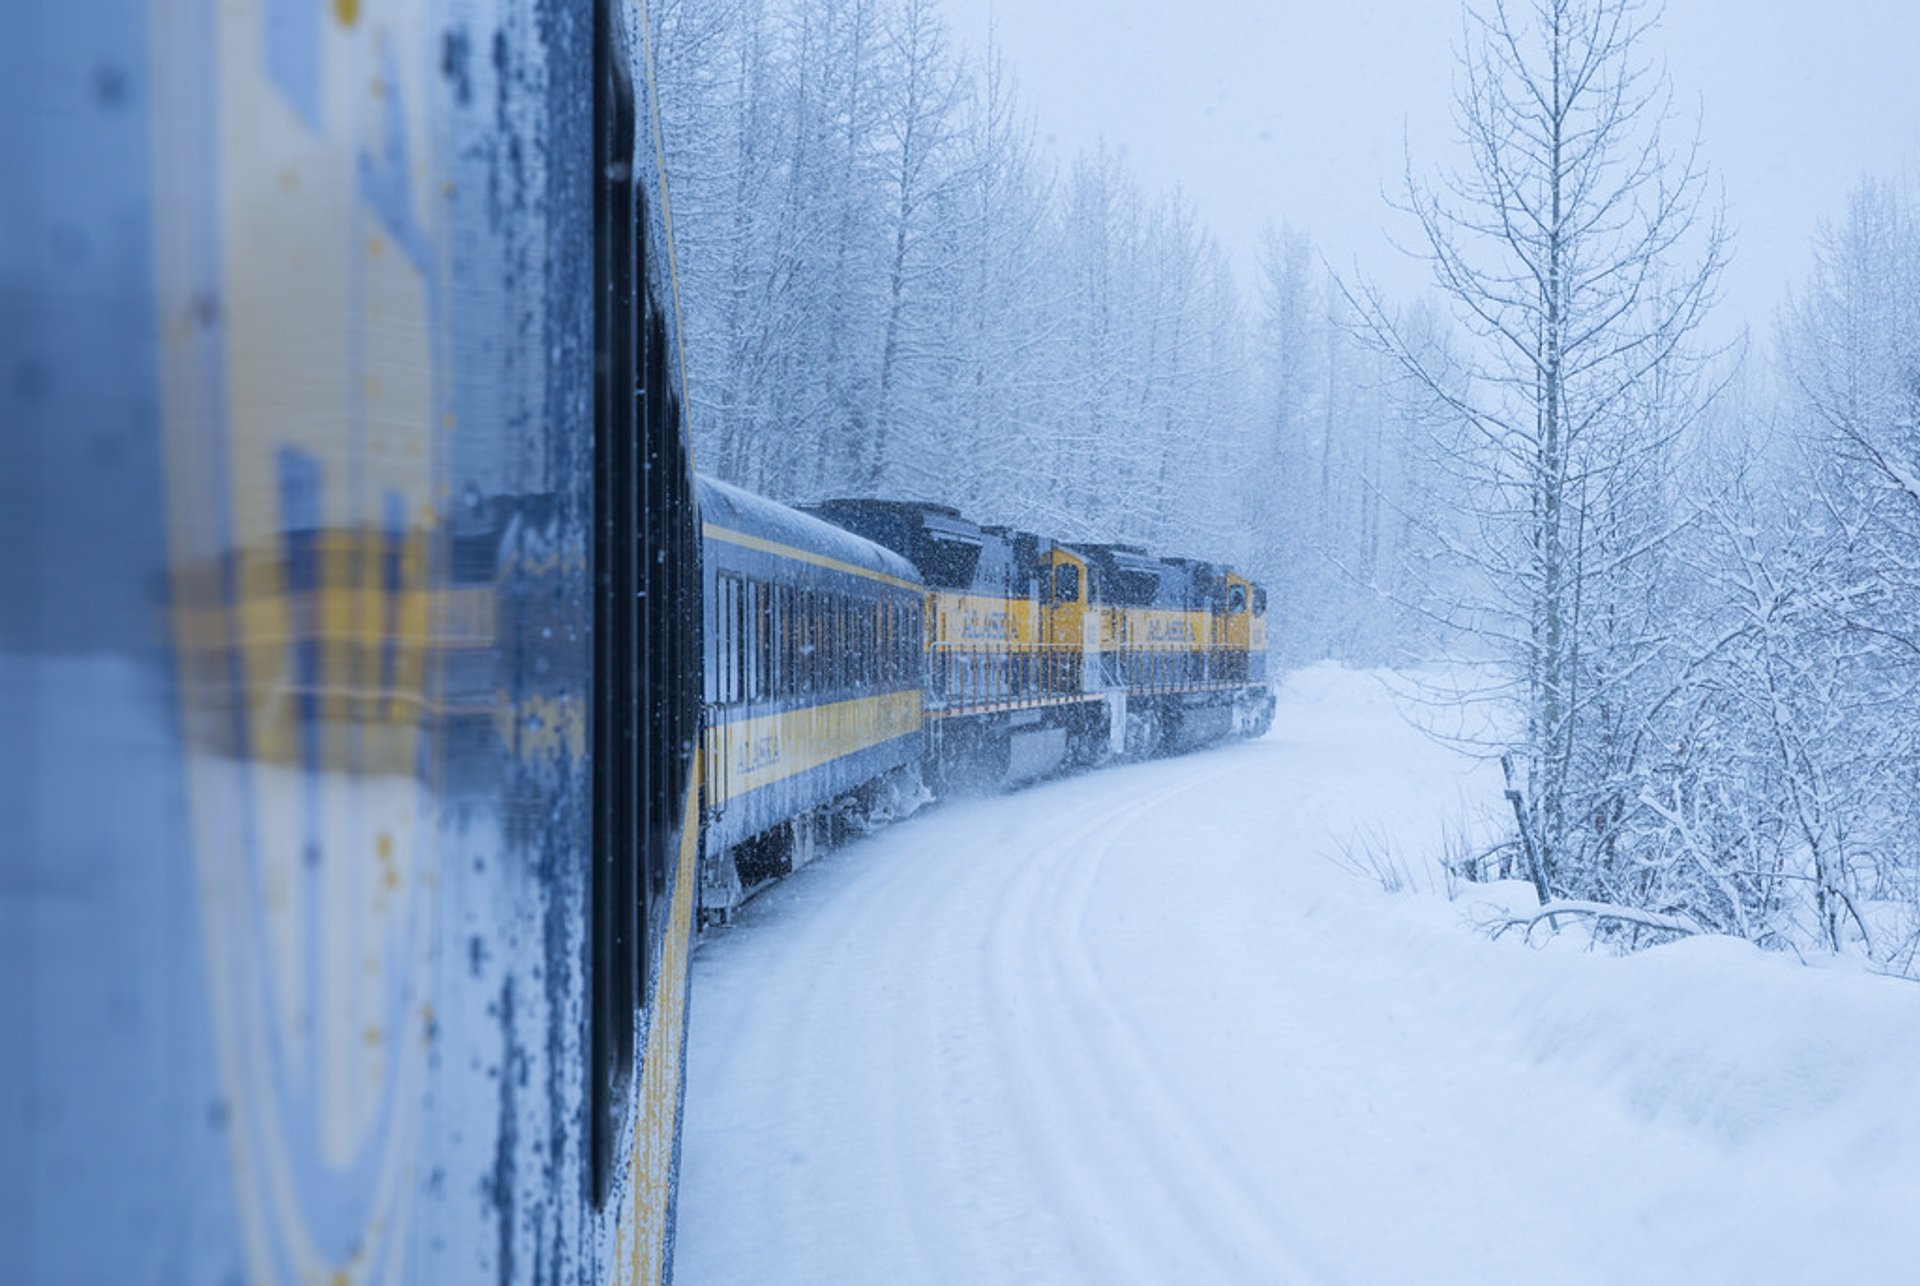 Winter Railroad Trip